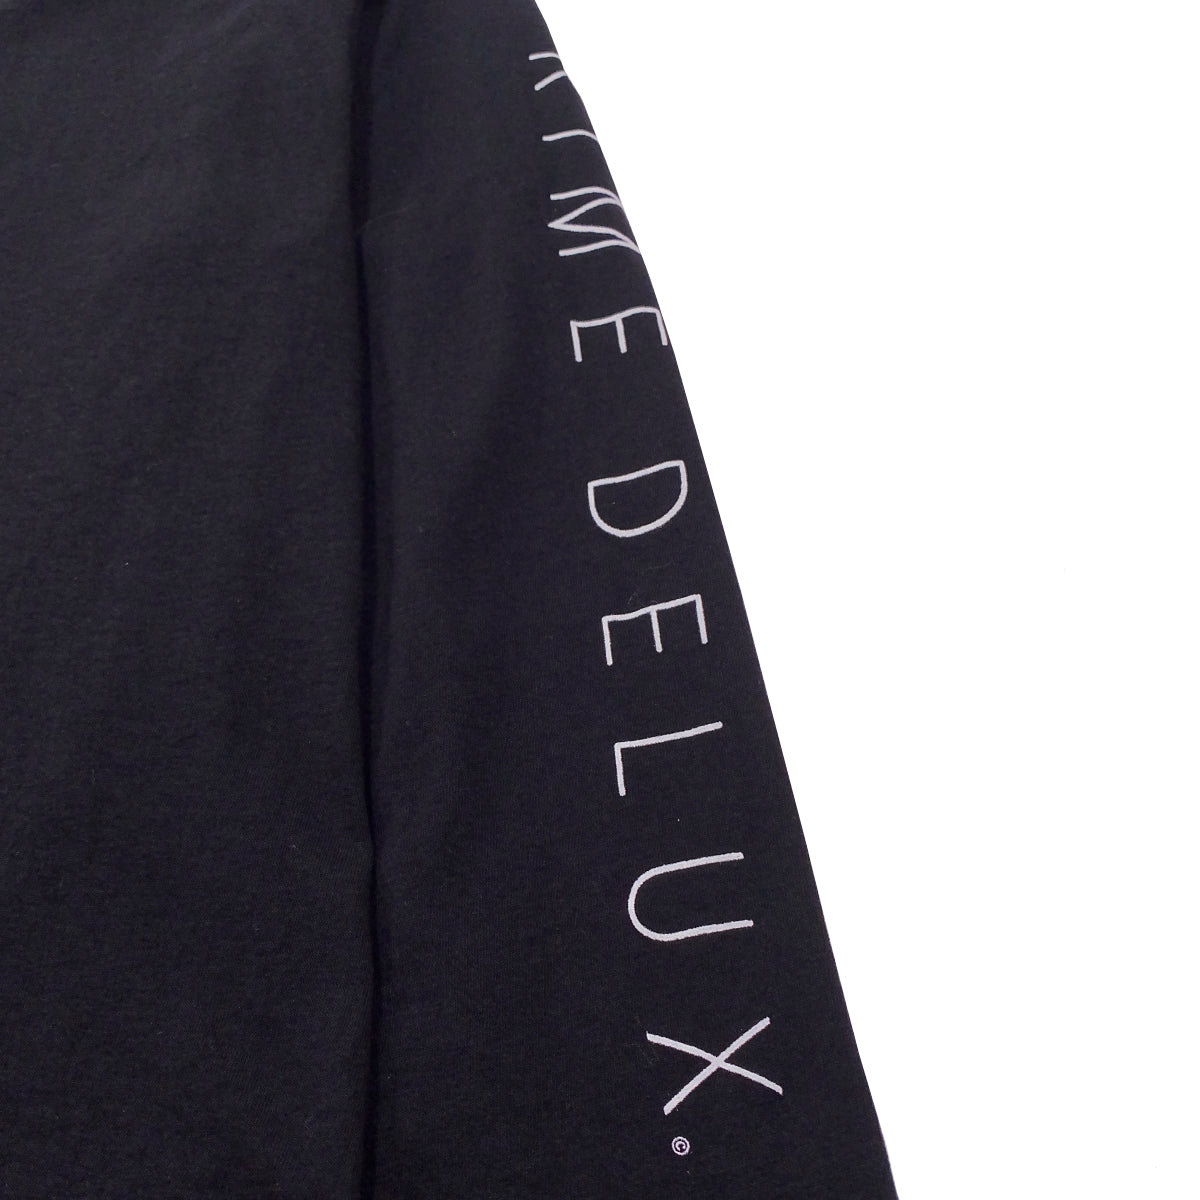 Prime Delux Unity Long Sleeve T Shirt - Black / White - Prime Delux Store